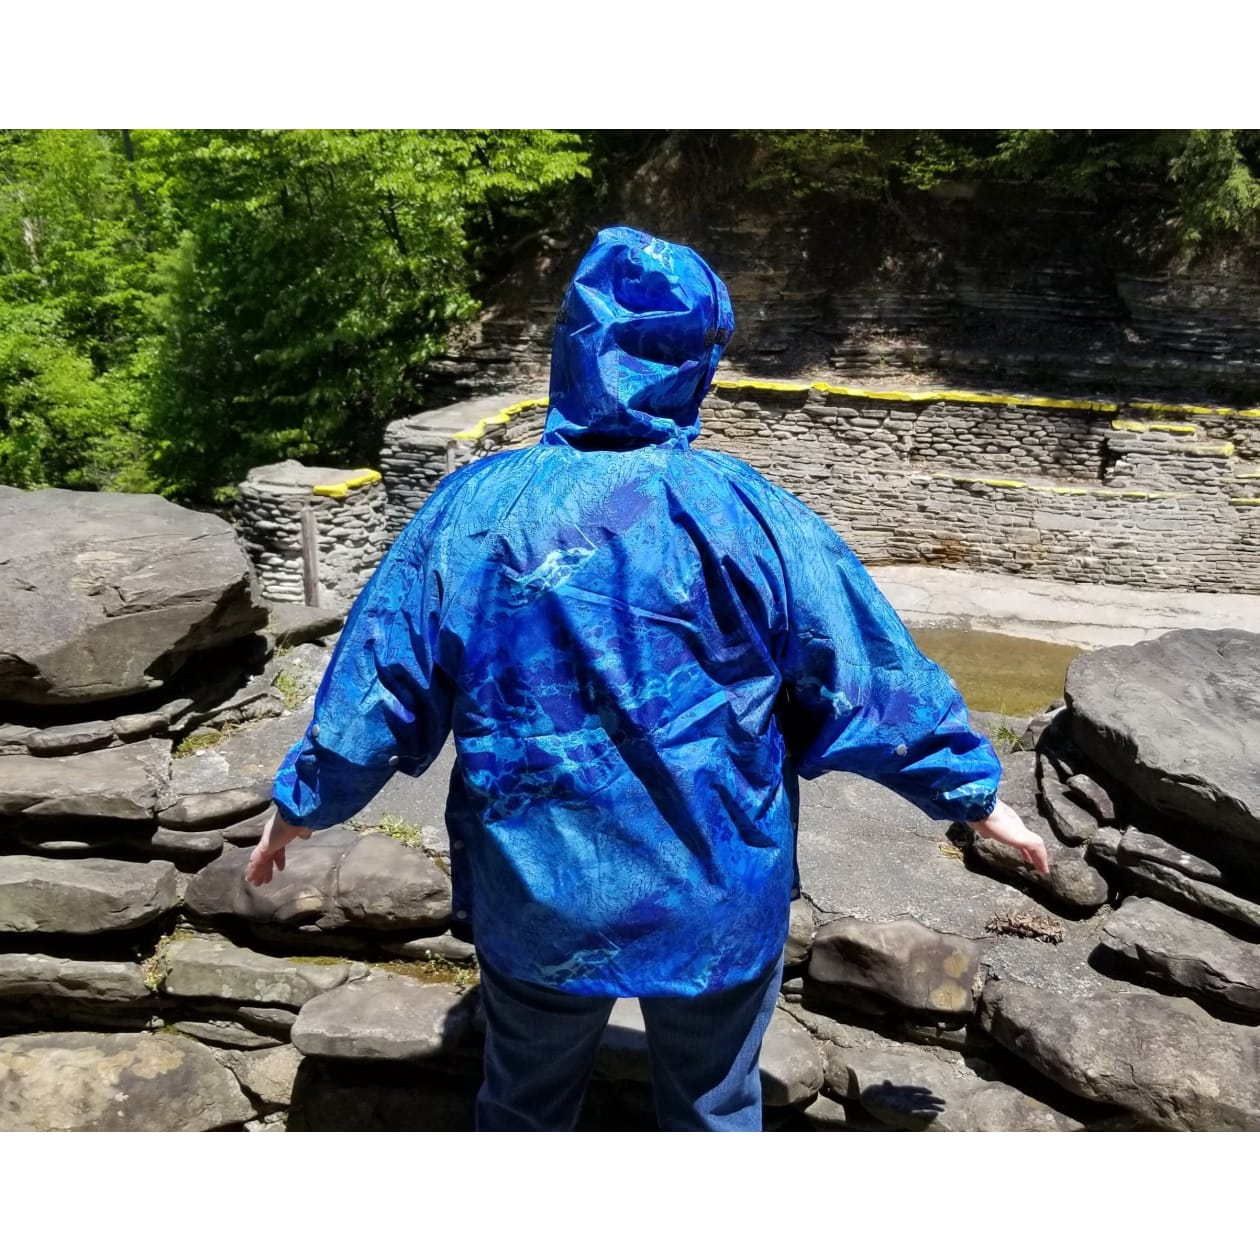 Brella 2015 Blue Unisex Rain Jacket for Youth + Petite